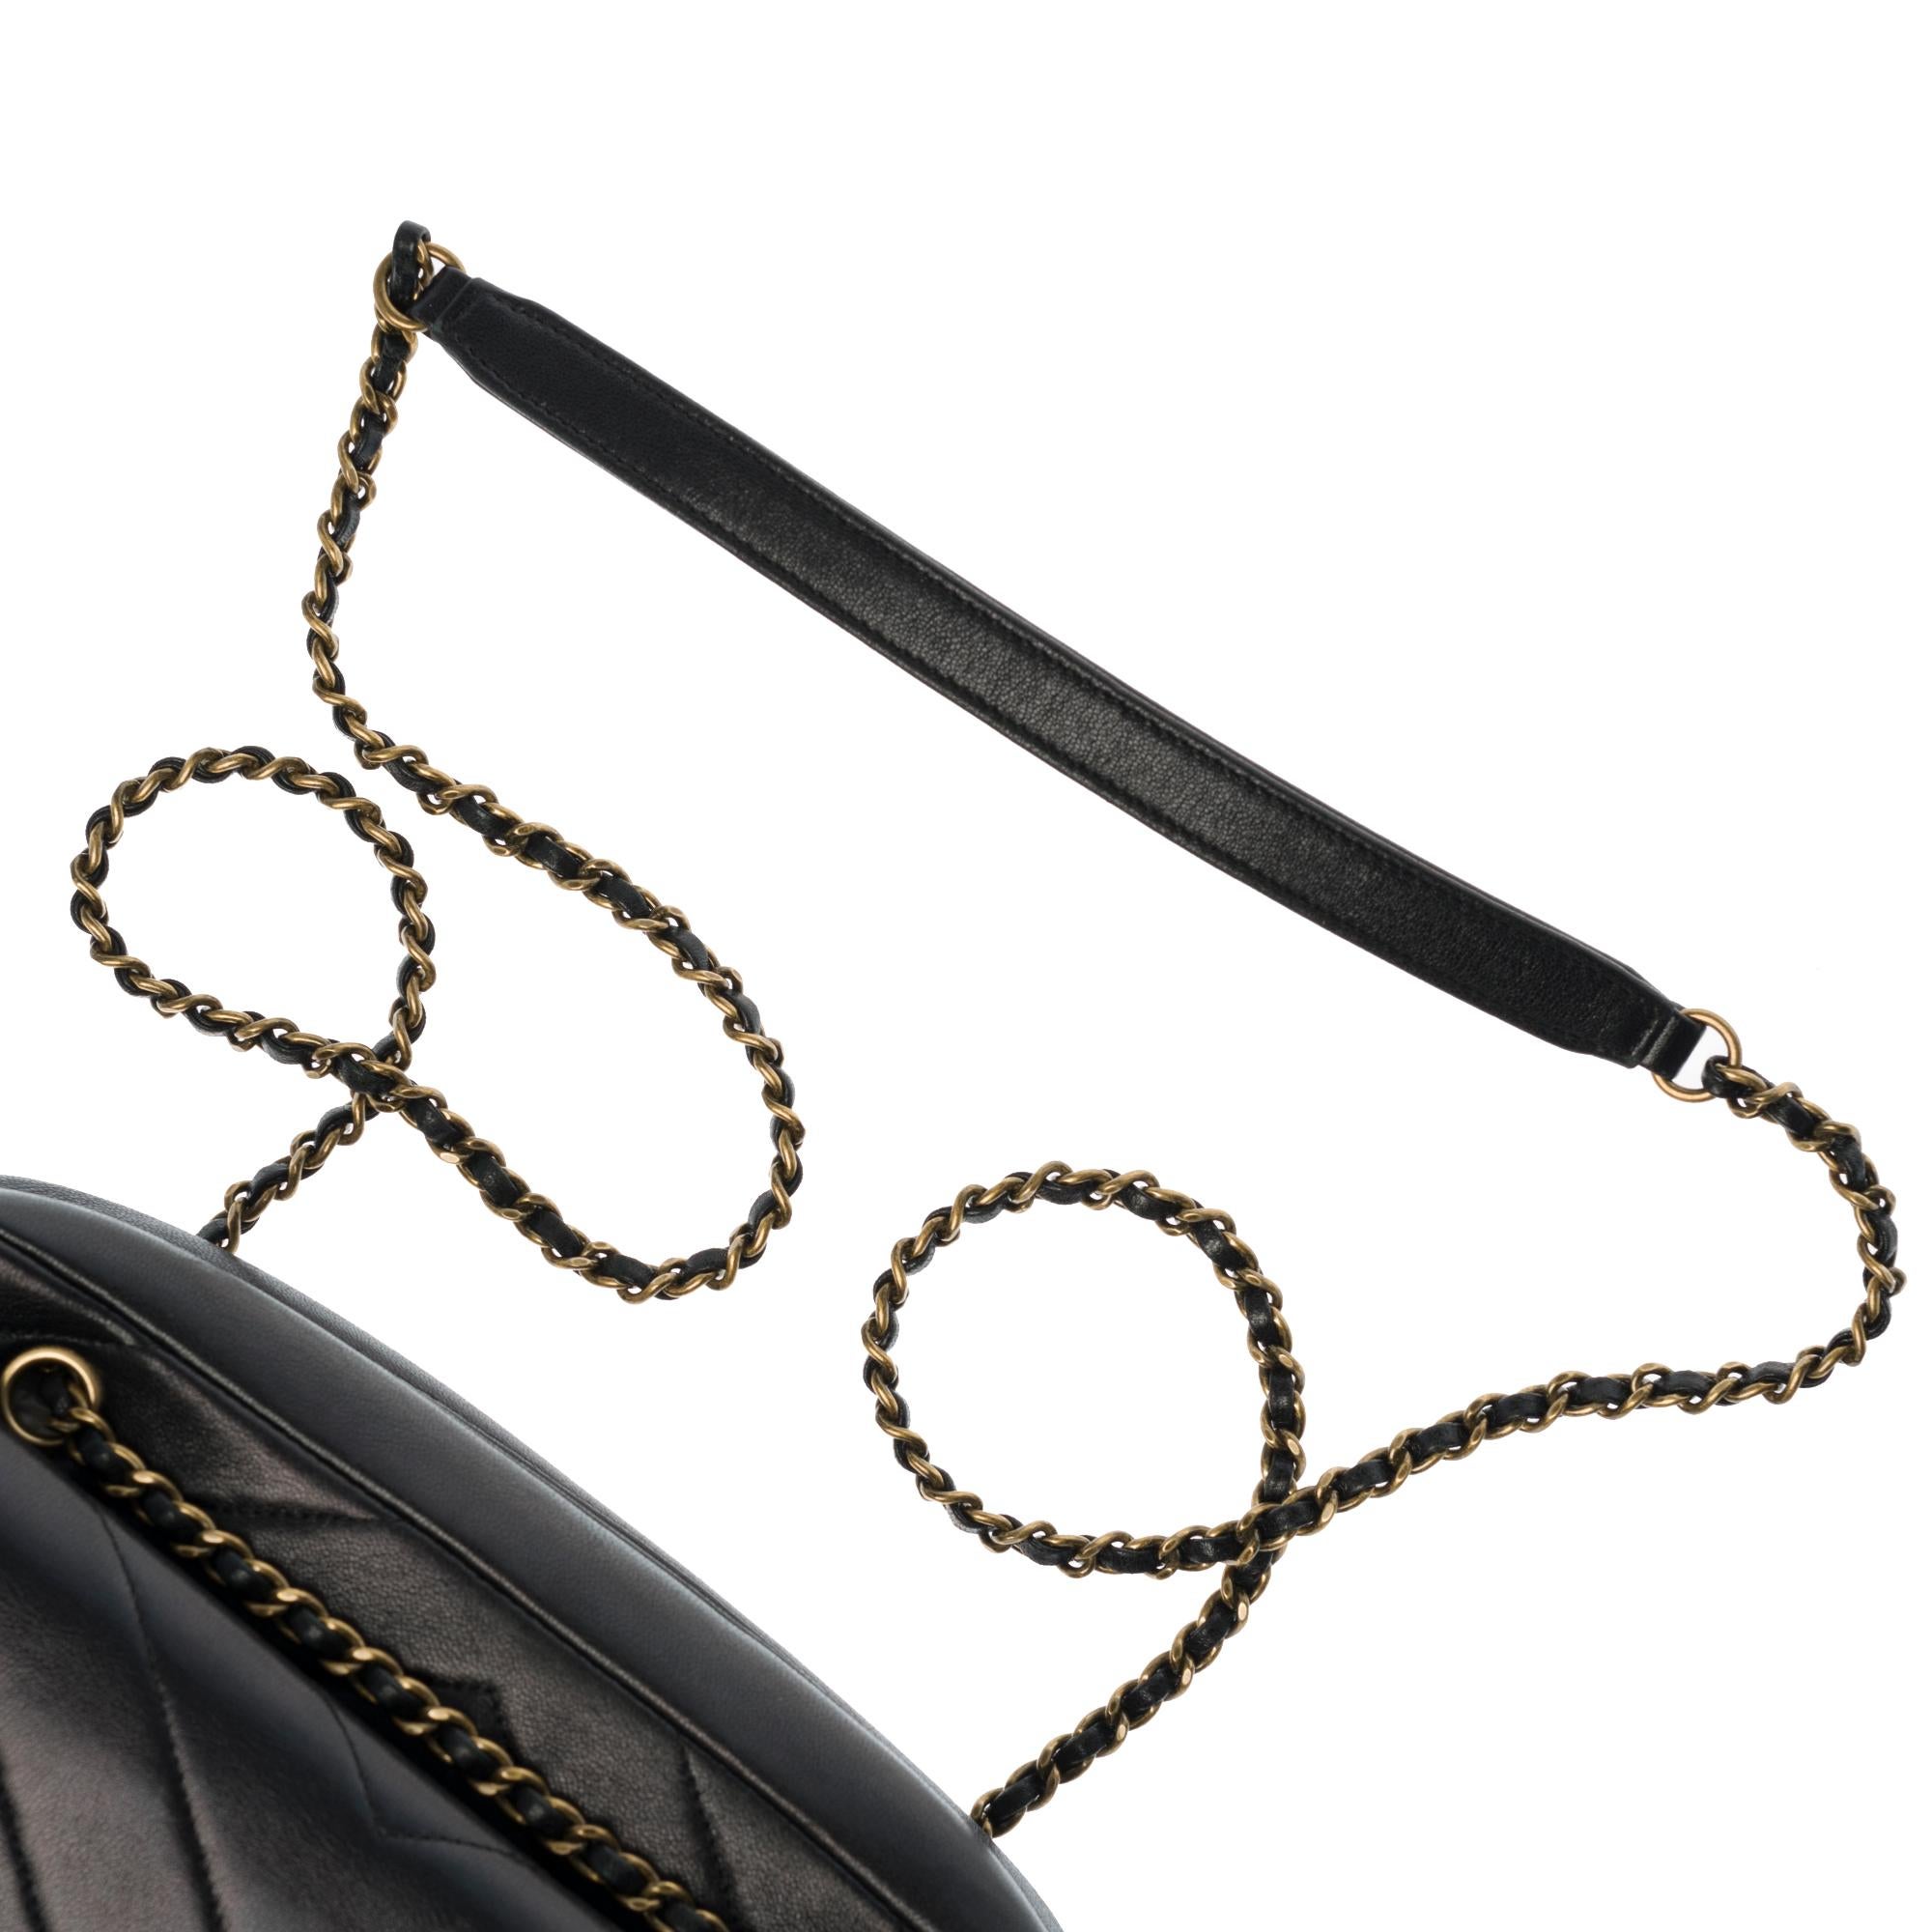 Amazing Chanel Camera shoulder bag in black herringbone leather, GHW 2